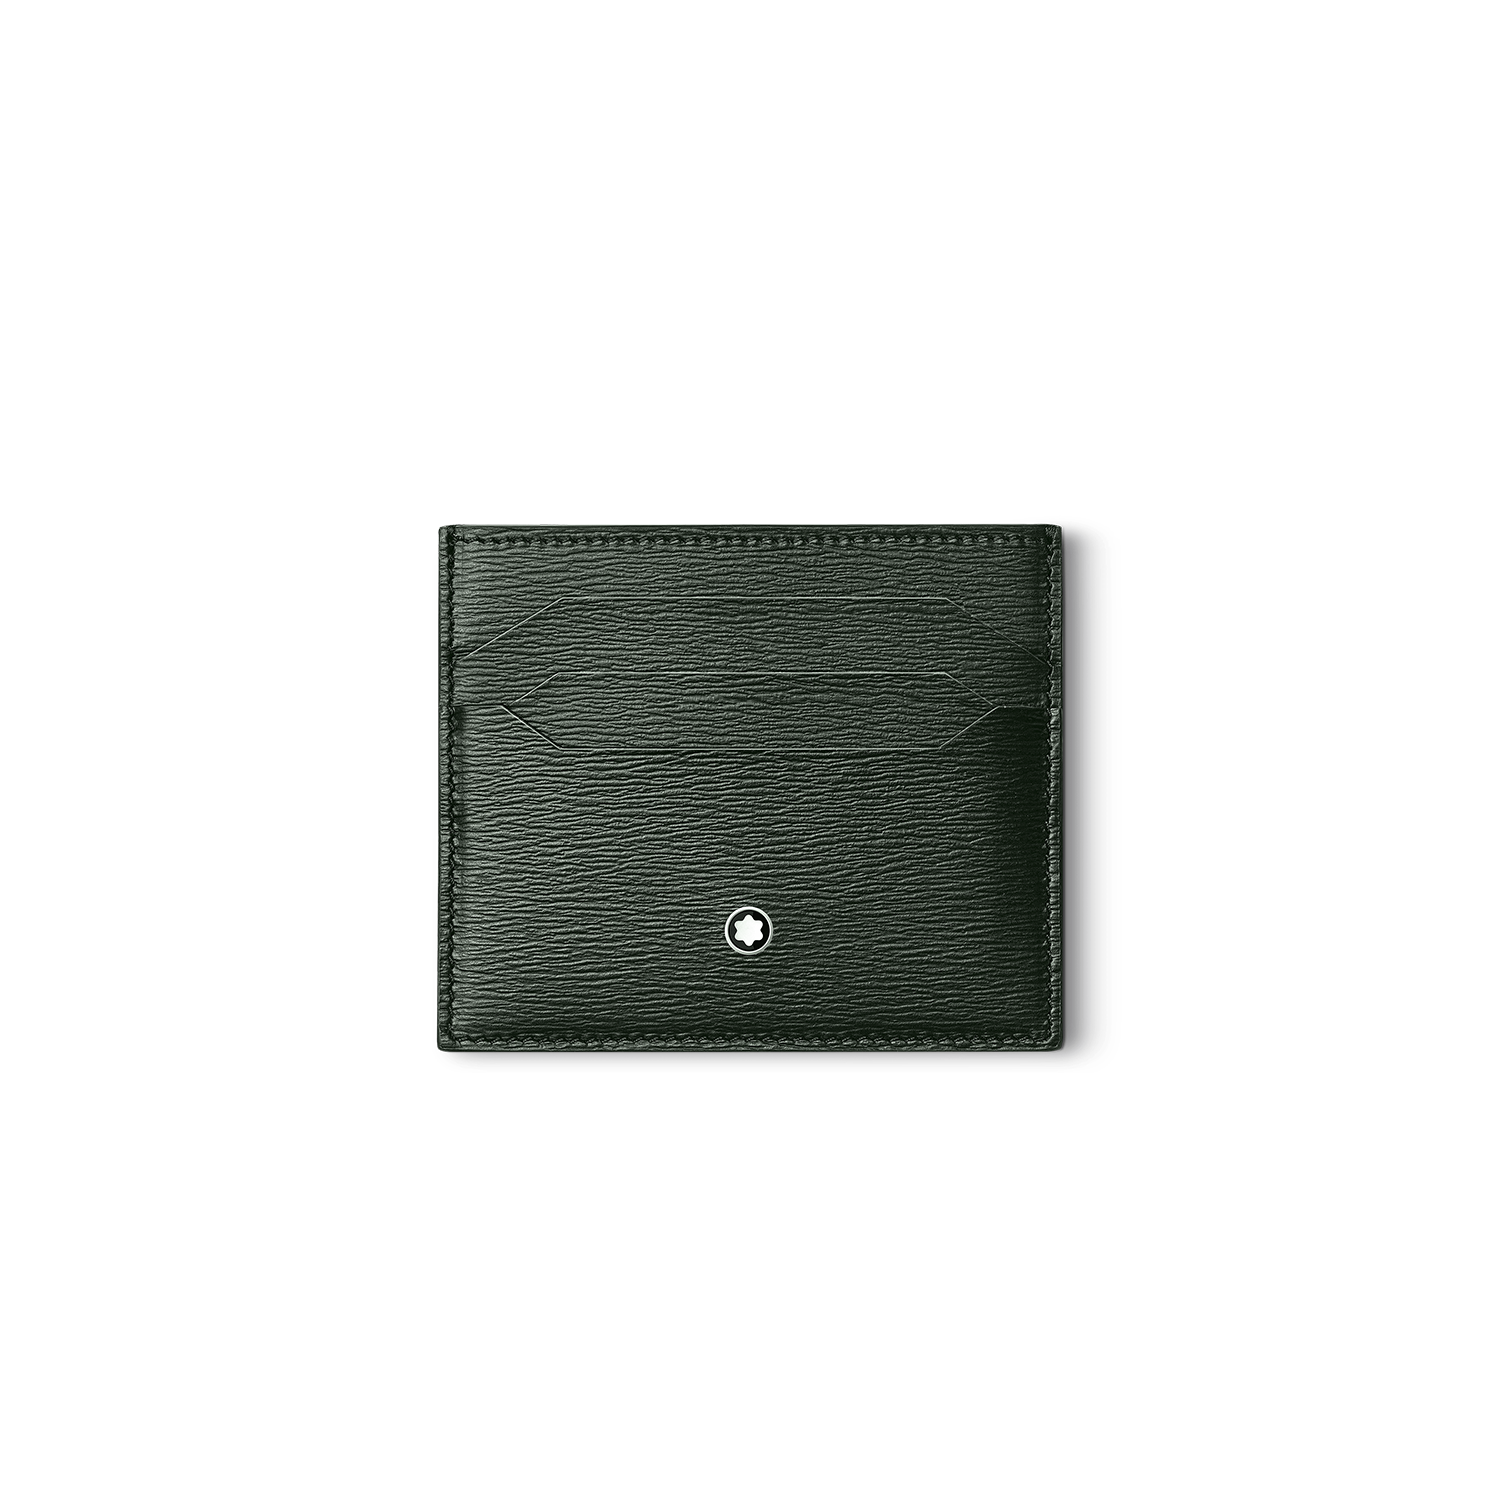 MST4810 Kredietkaartenhouder, deep forest groen * 129254 * Montblanc leather